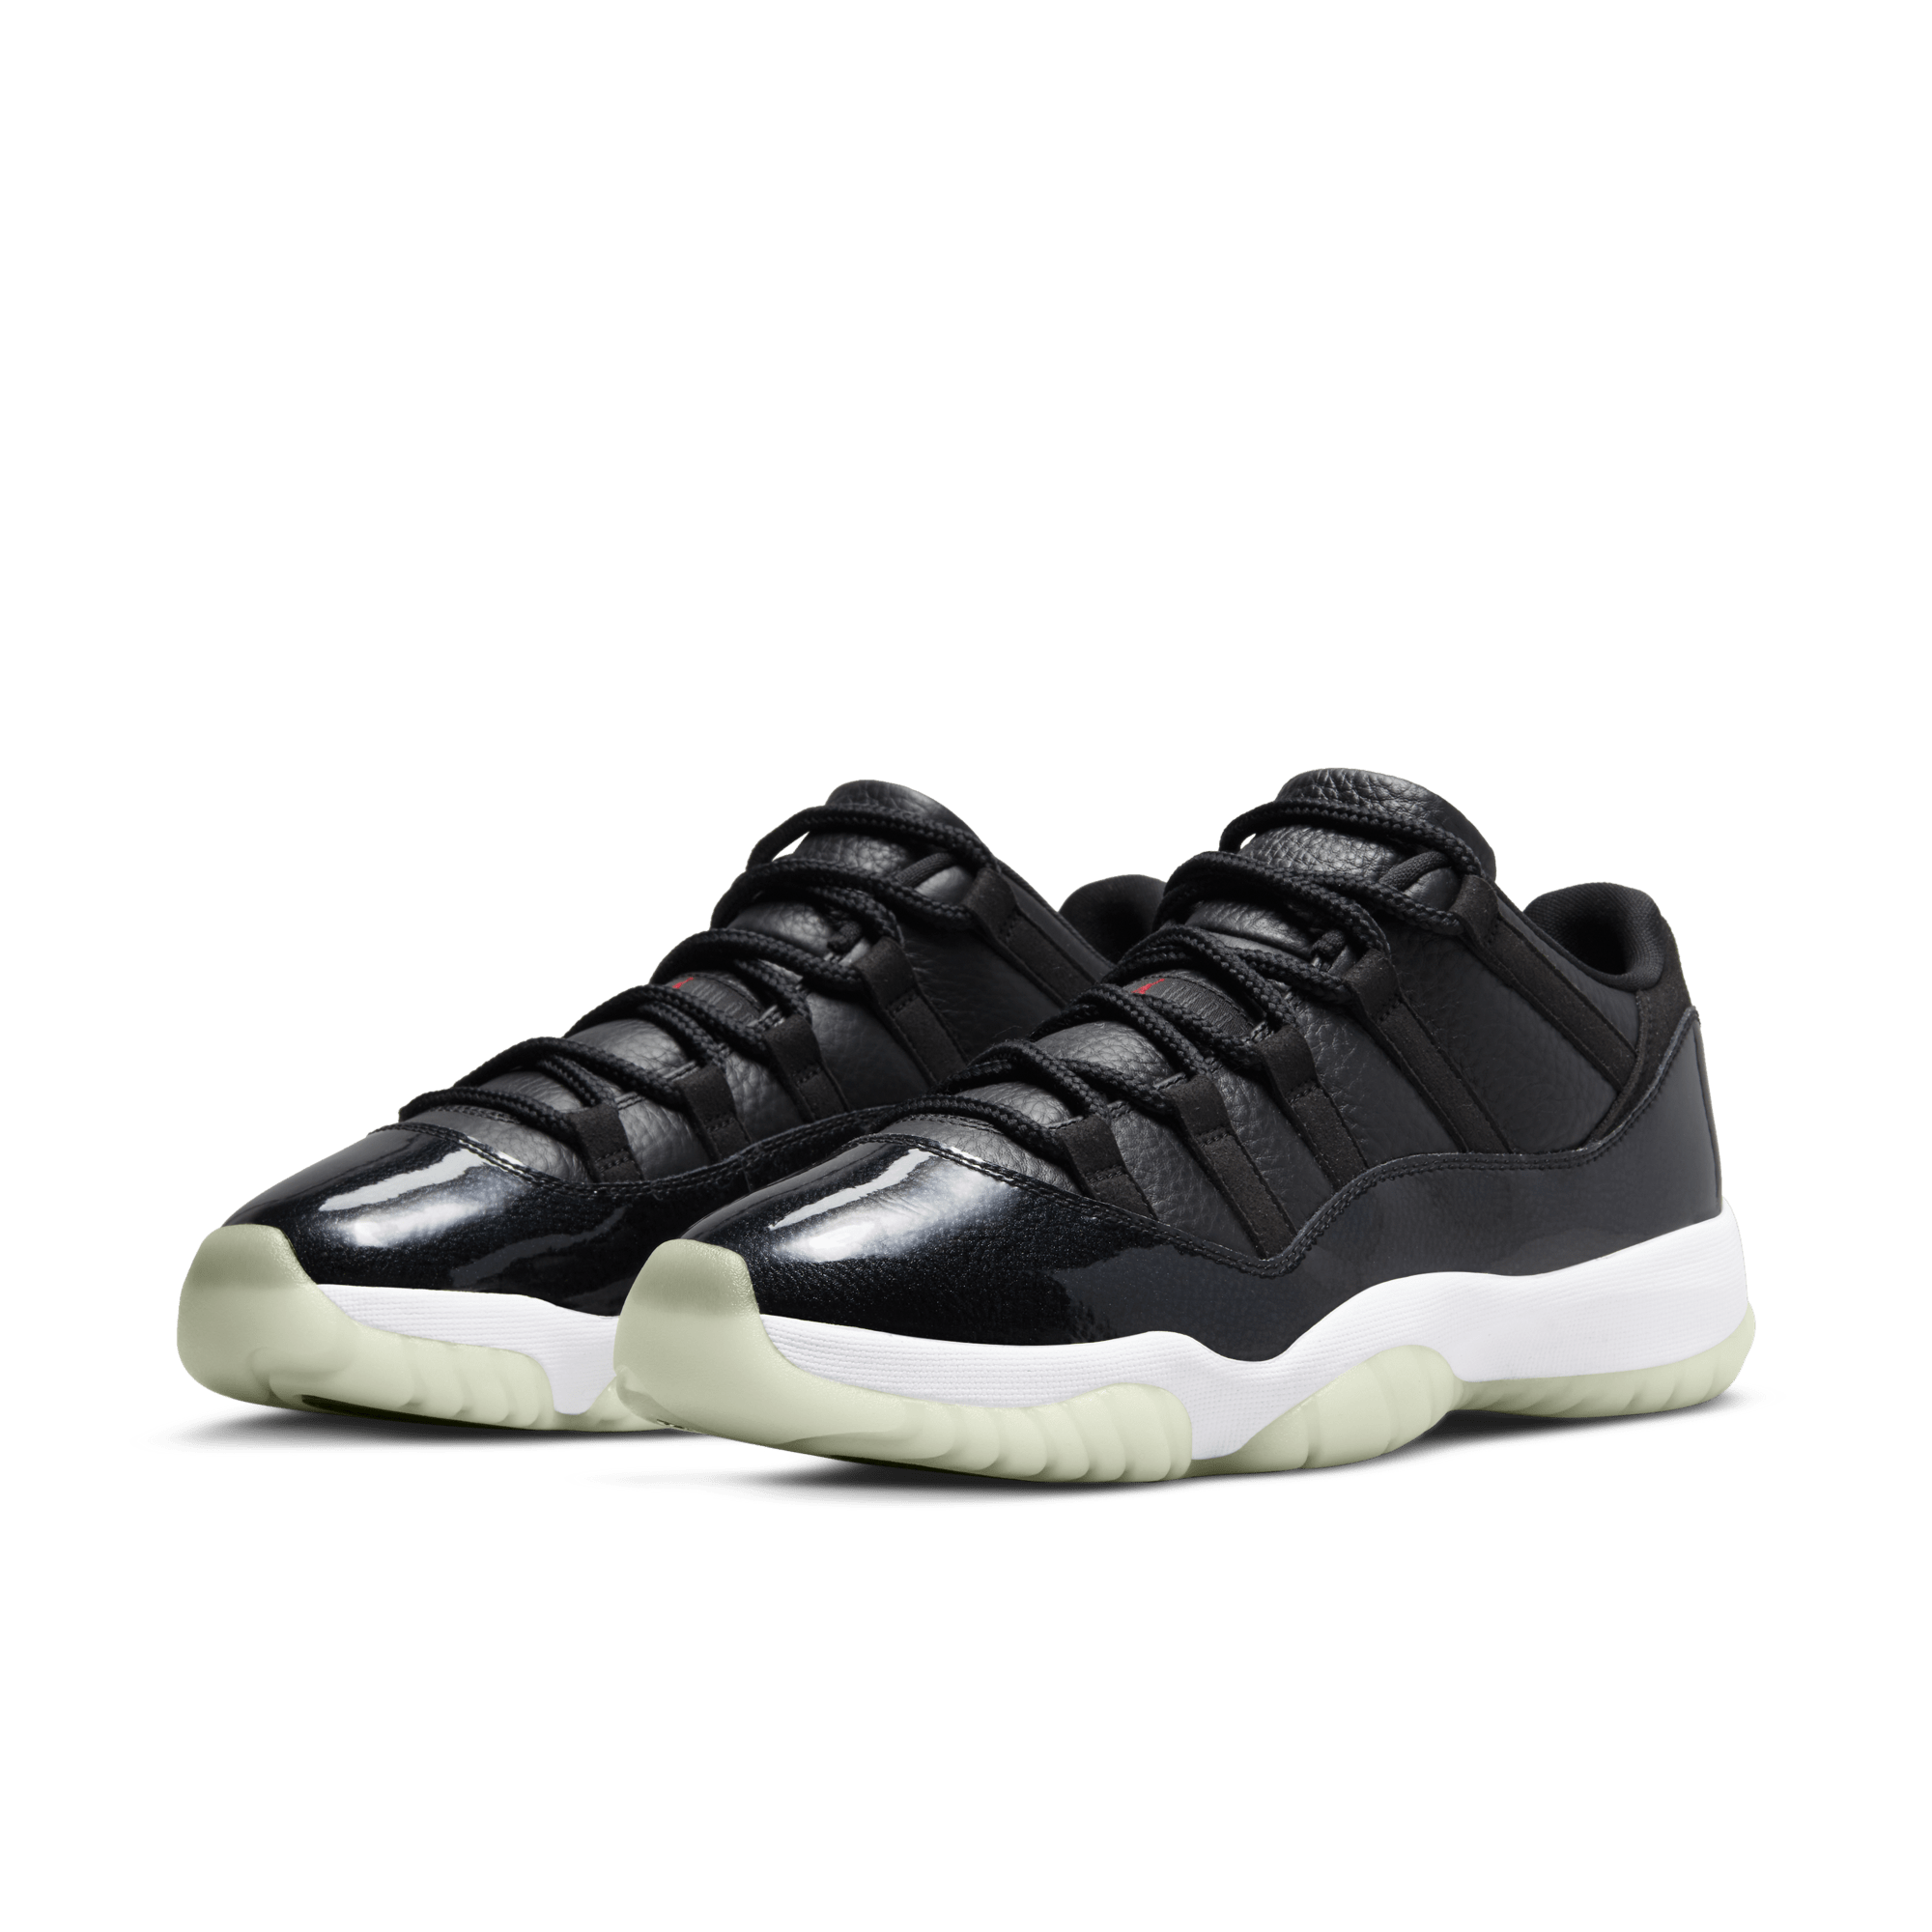 Air Jordan 11 Concord 'White & Black' Release Date. Nike SNKRS GB